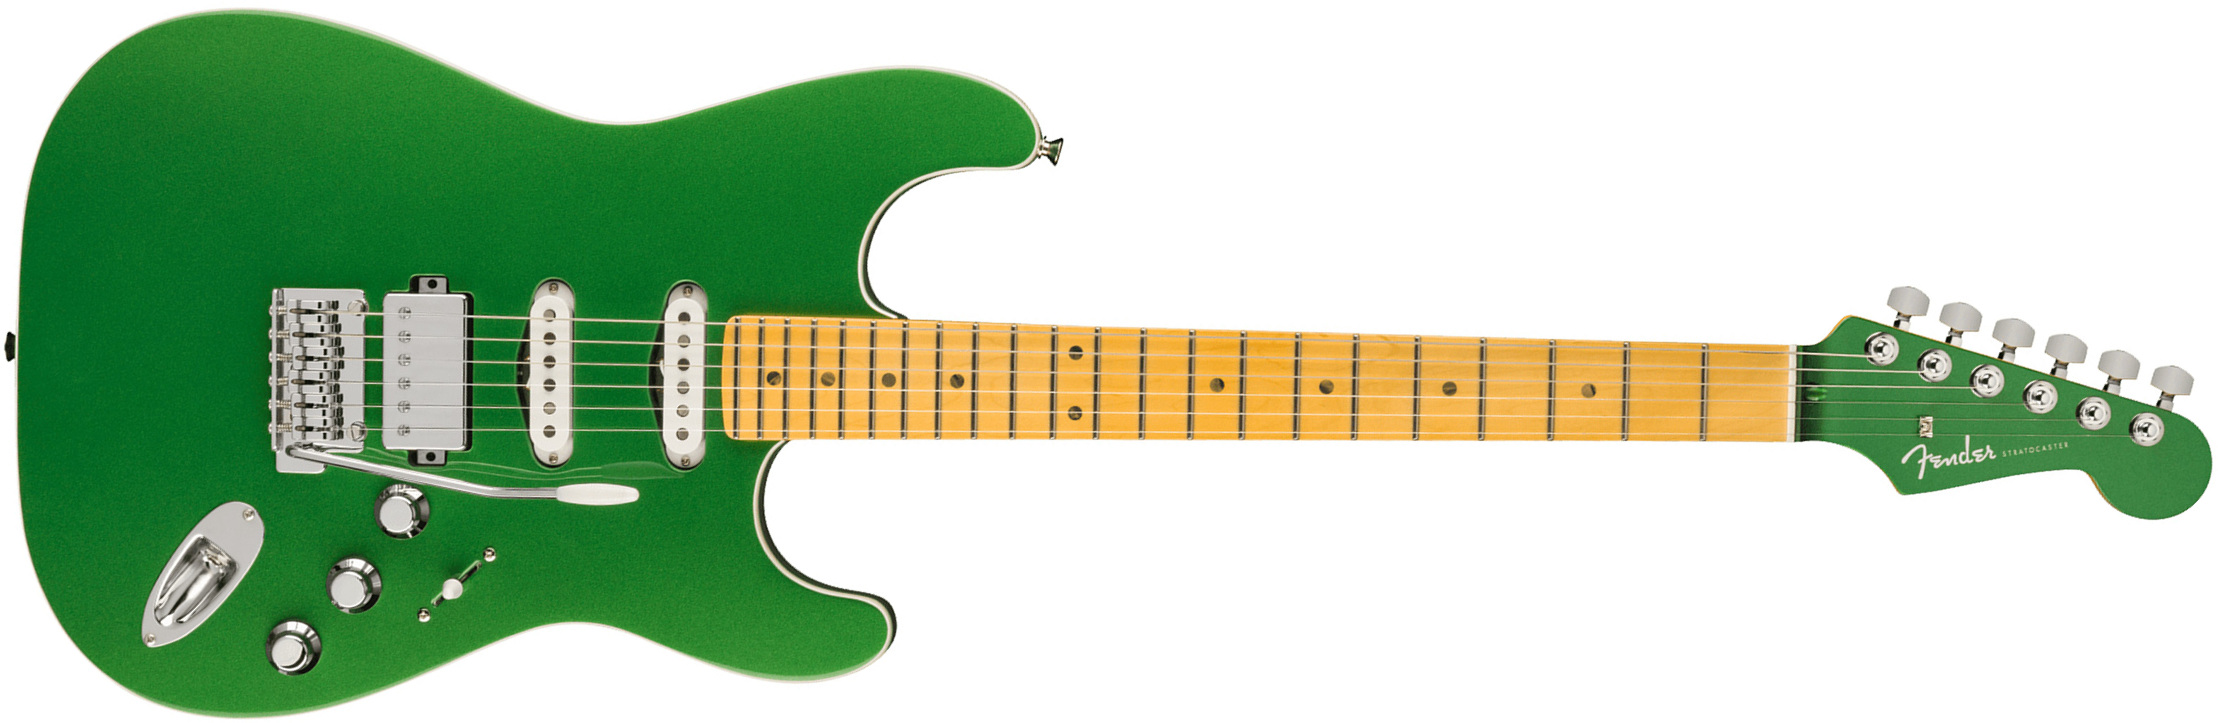 Fender Strat Aerodyne Special Jap Trem Hss Mn - Speed Green Metallic - Str shape electric guitar - Main picture